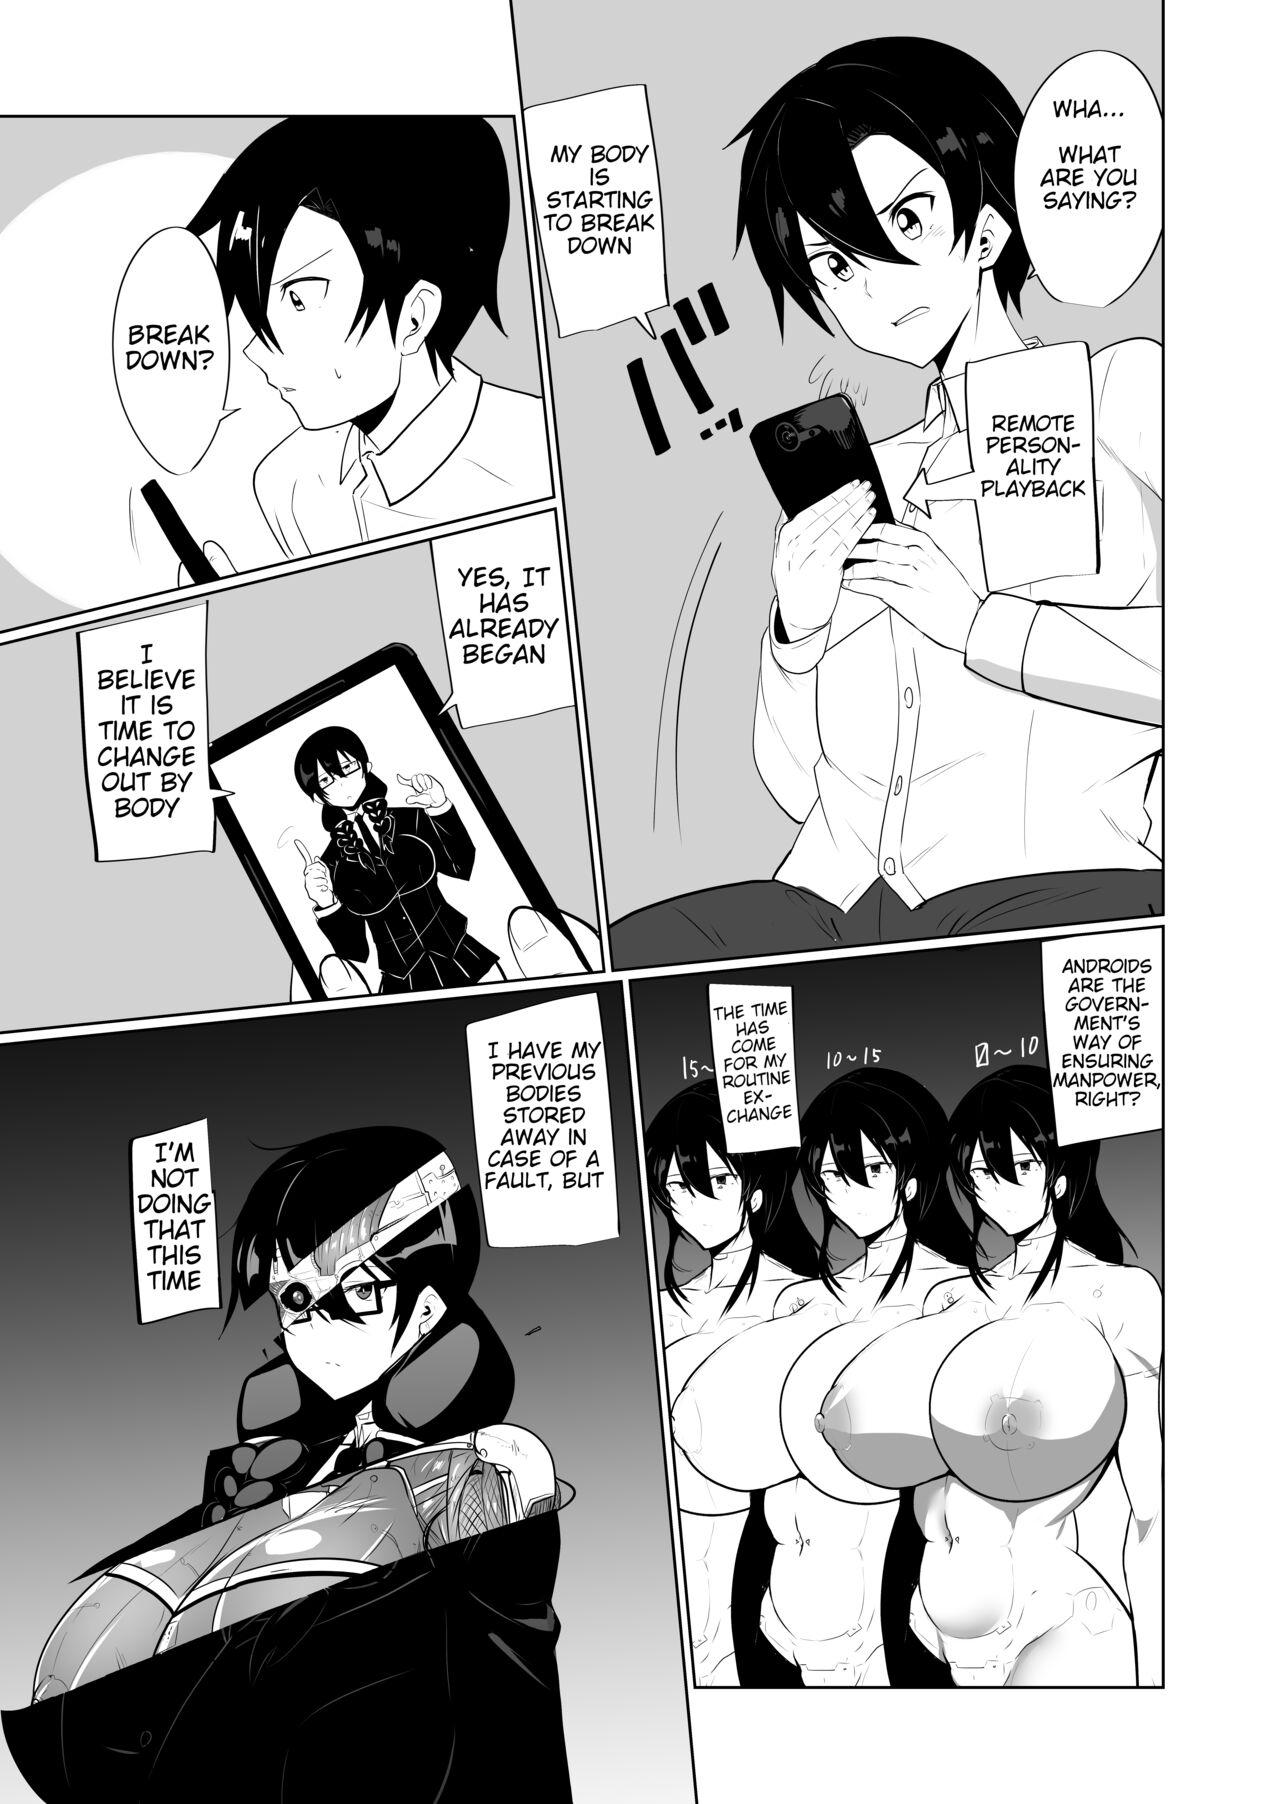 Free Blow Job Android no Osananajimi o Bukkowasu Manga | The Manga about Violently Breaking your Android Childhood Friend - Original Home - Page 5